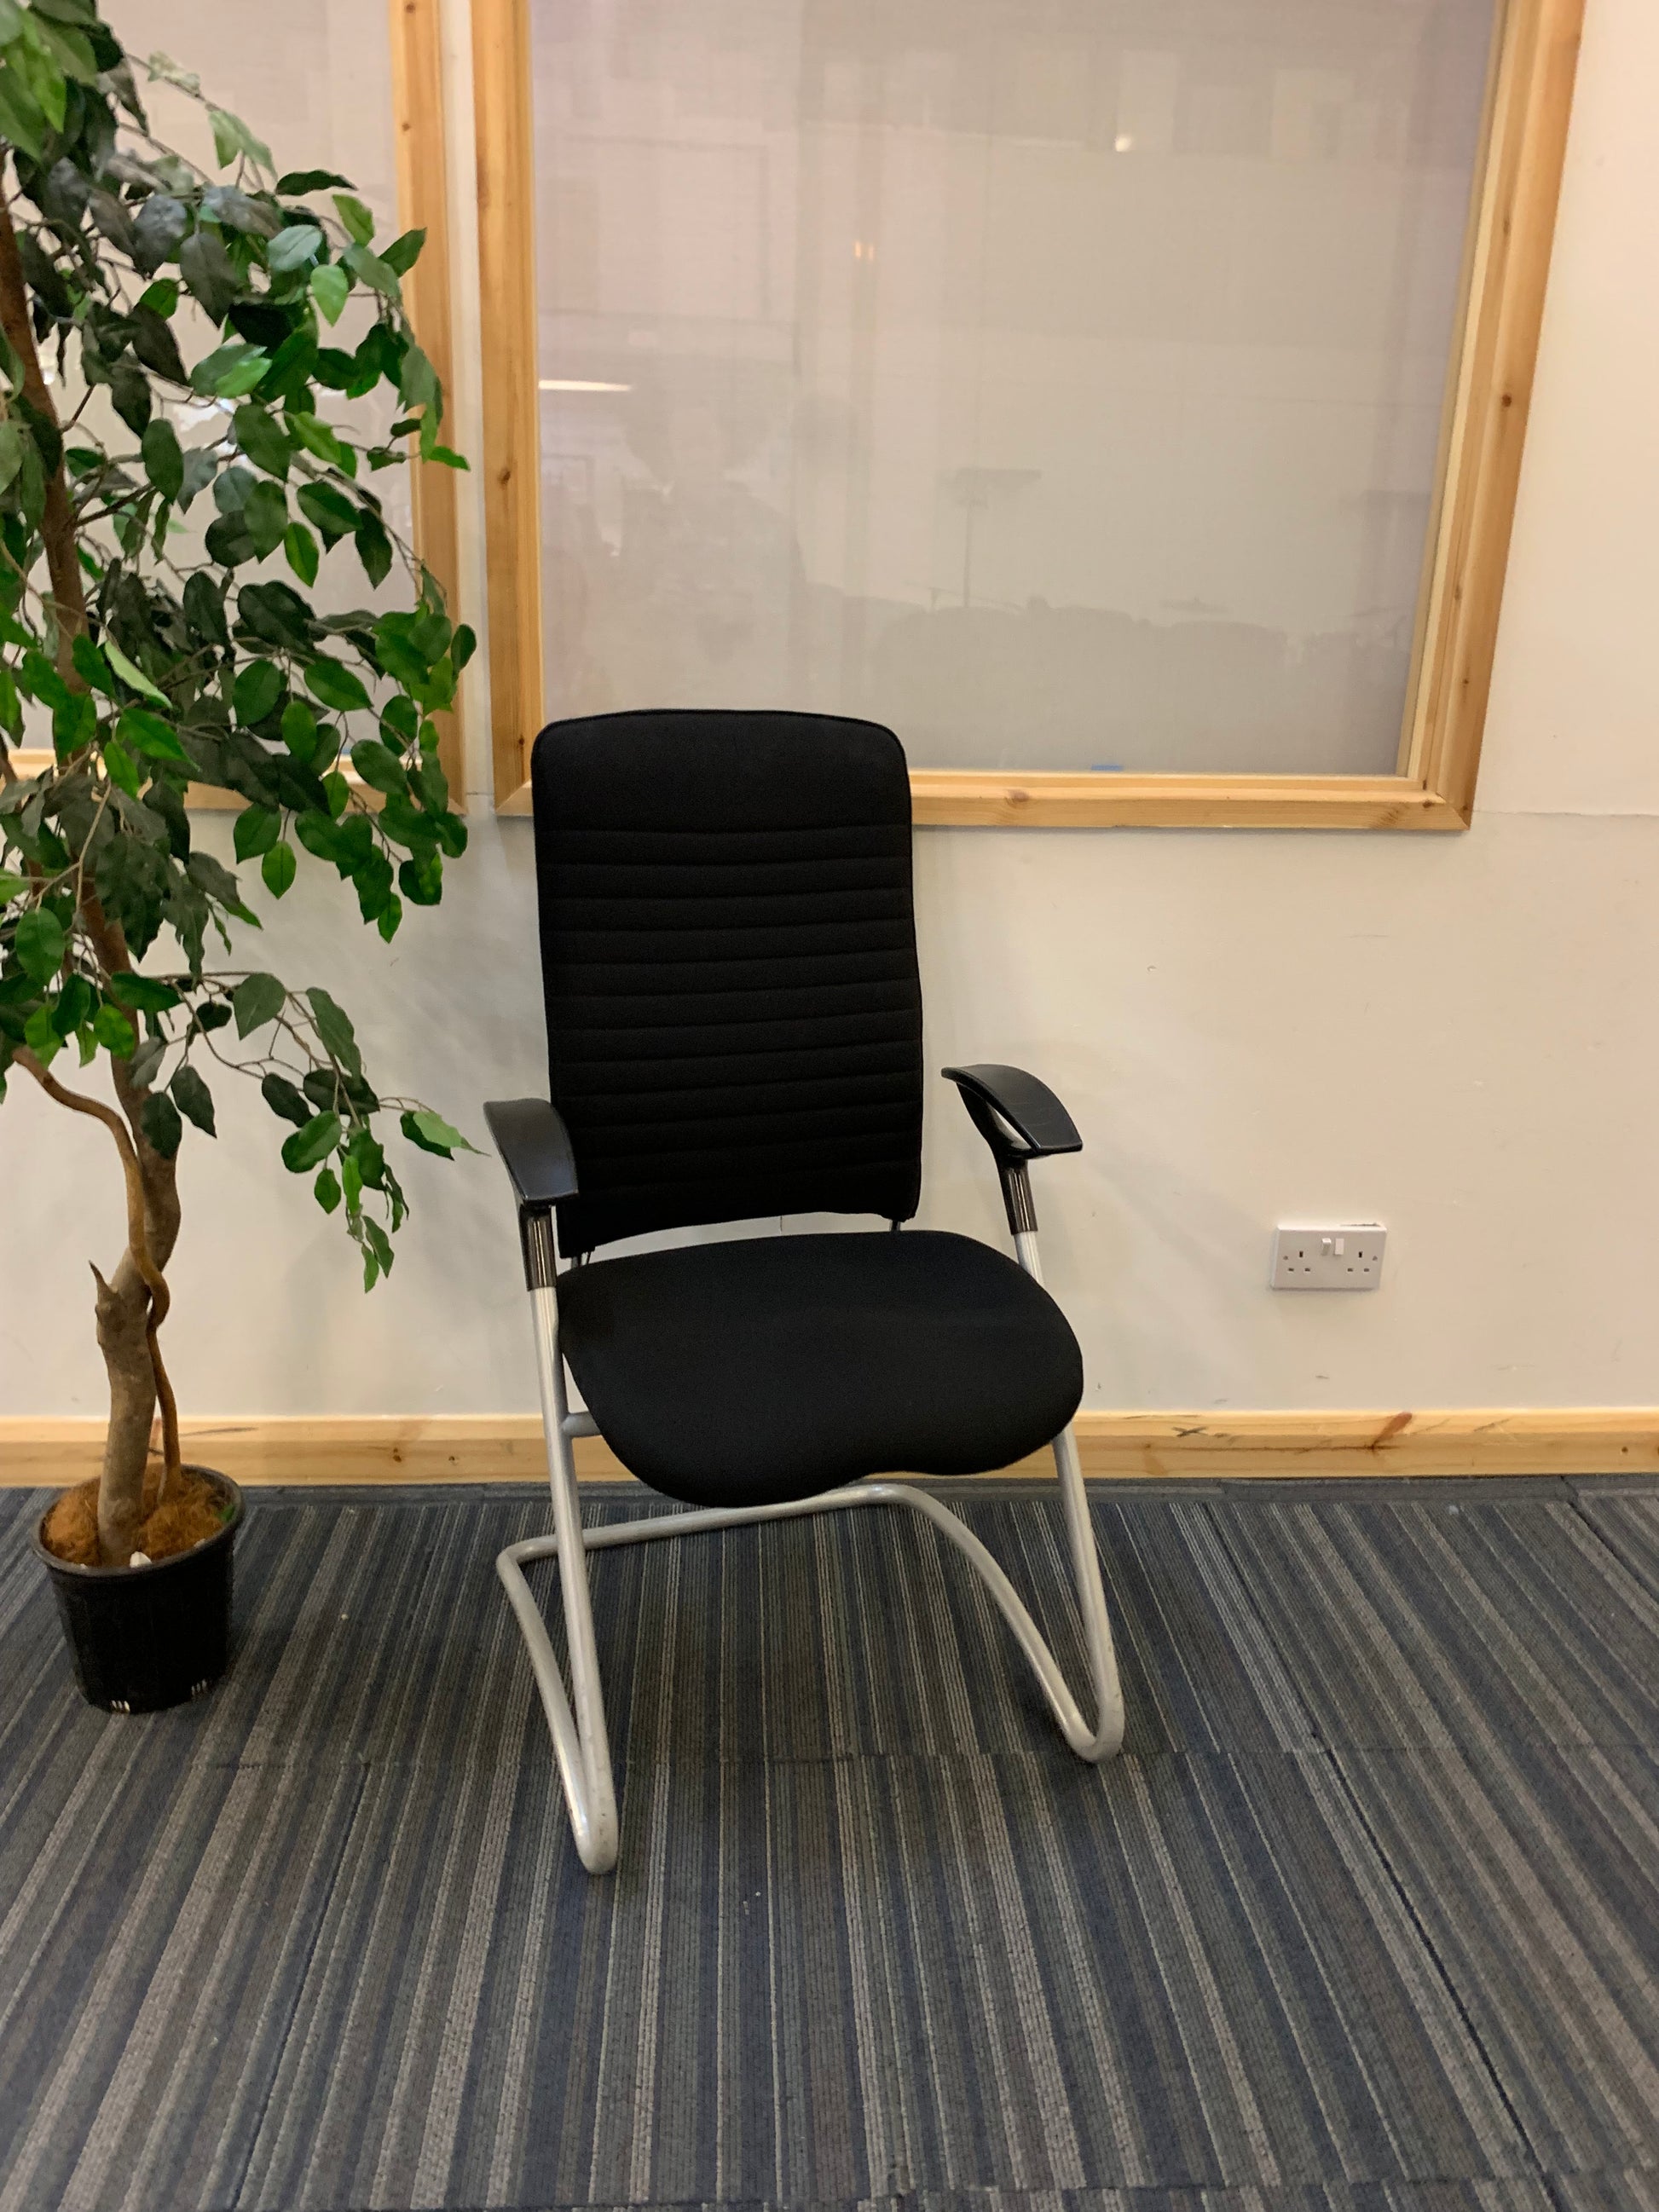 left, green plant, centre Black executive cantilever chair